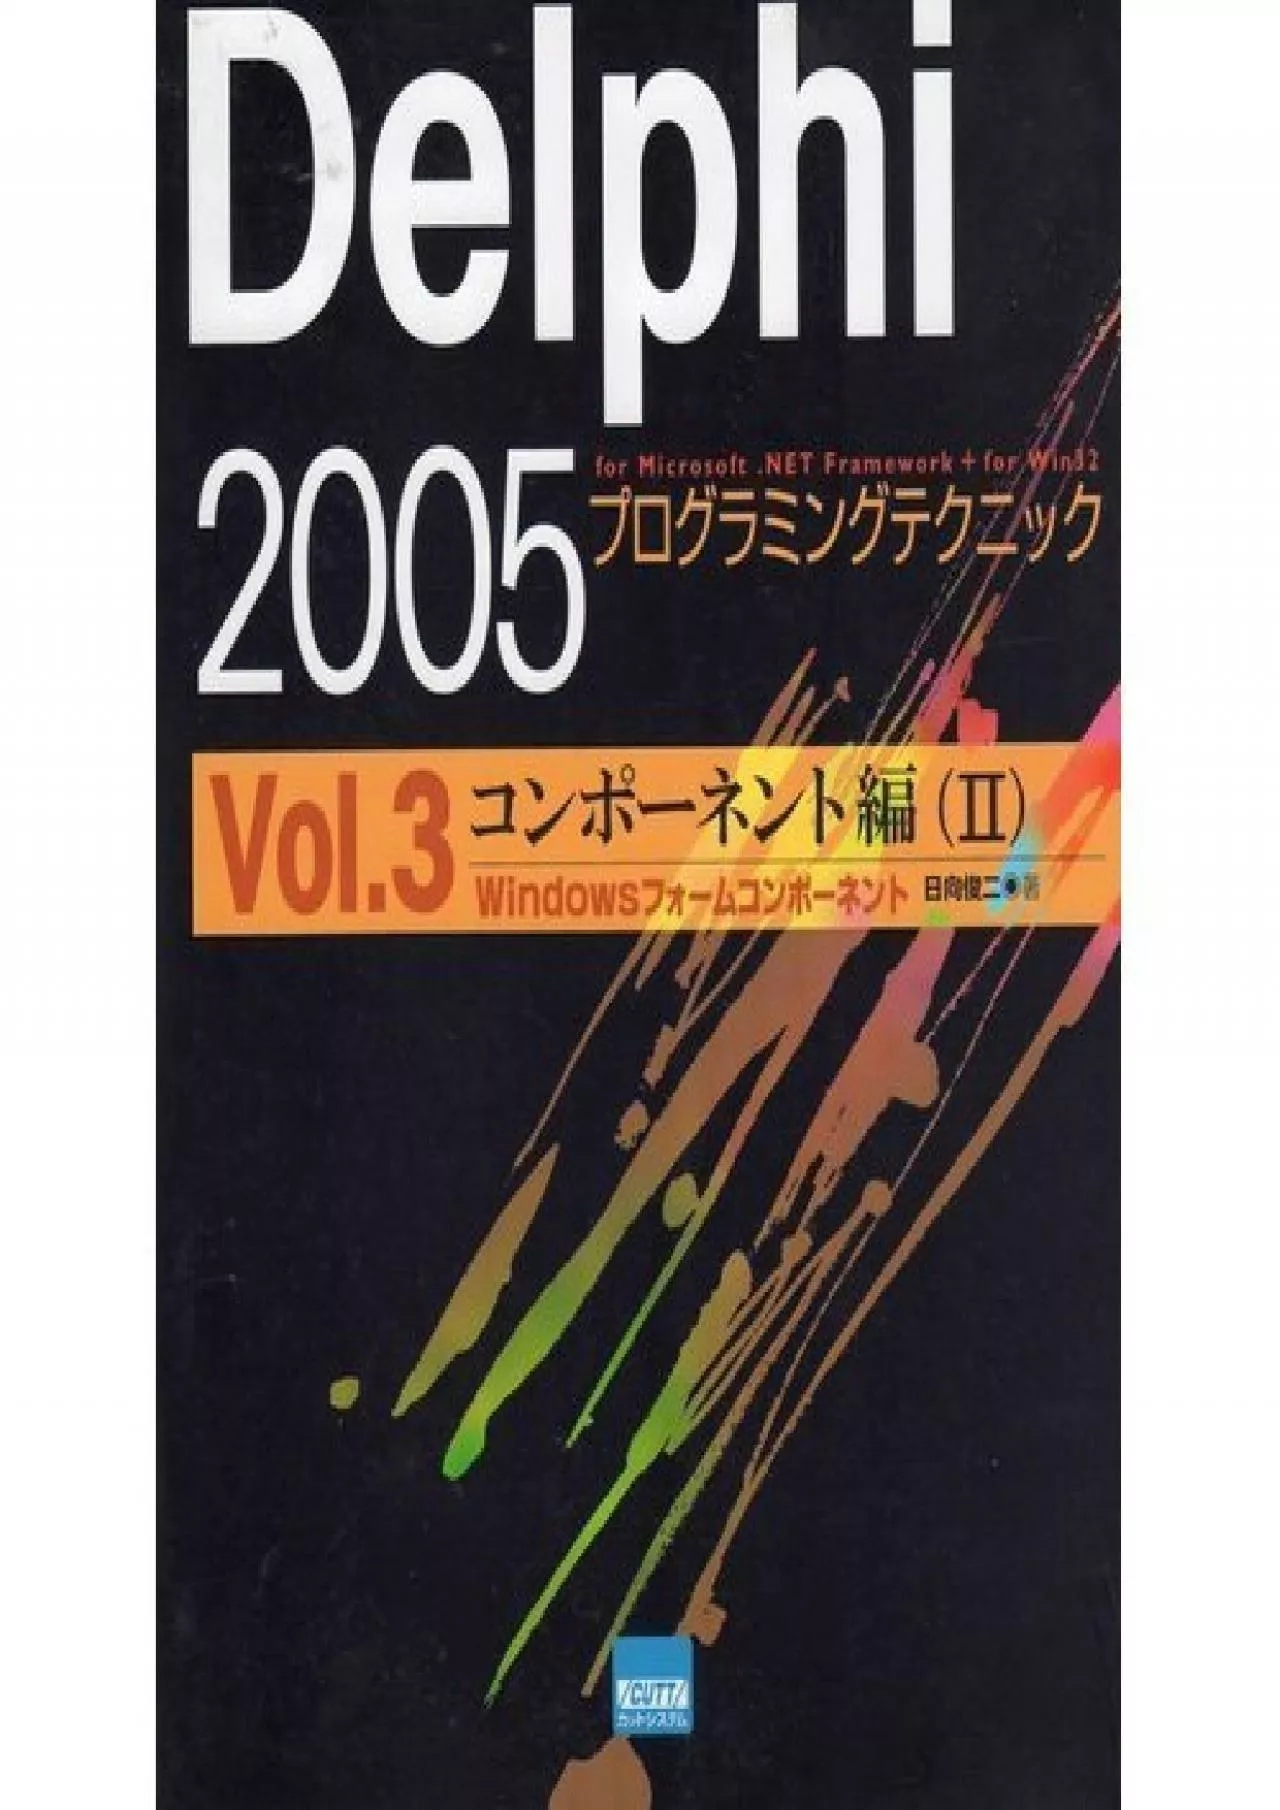 [eBOOK]-Delphi 2005 Programming Techniques-For Microsoft.NET Framework + for Win32 (Vol.3)